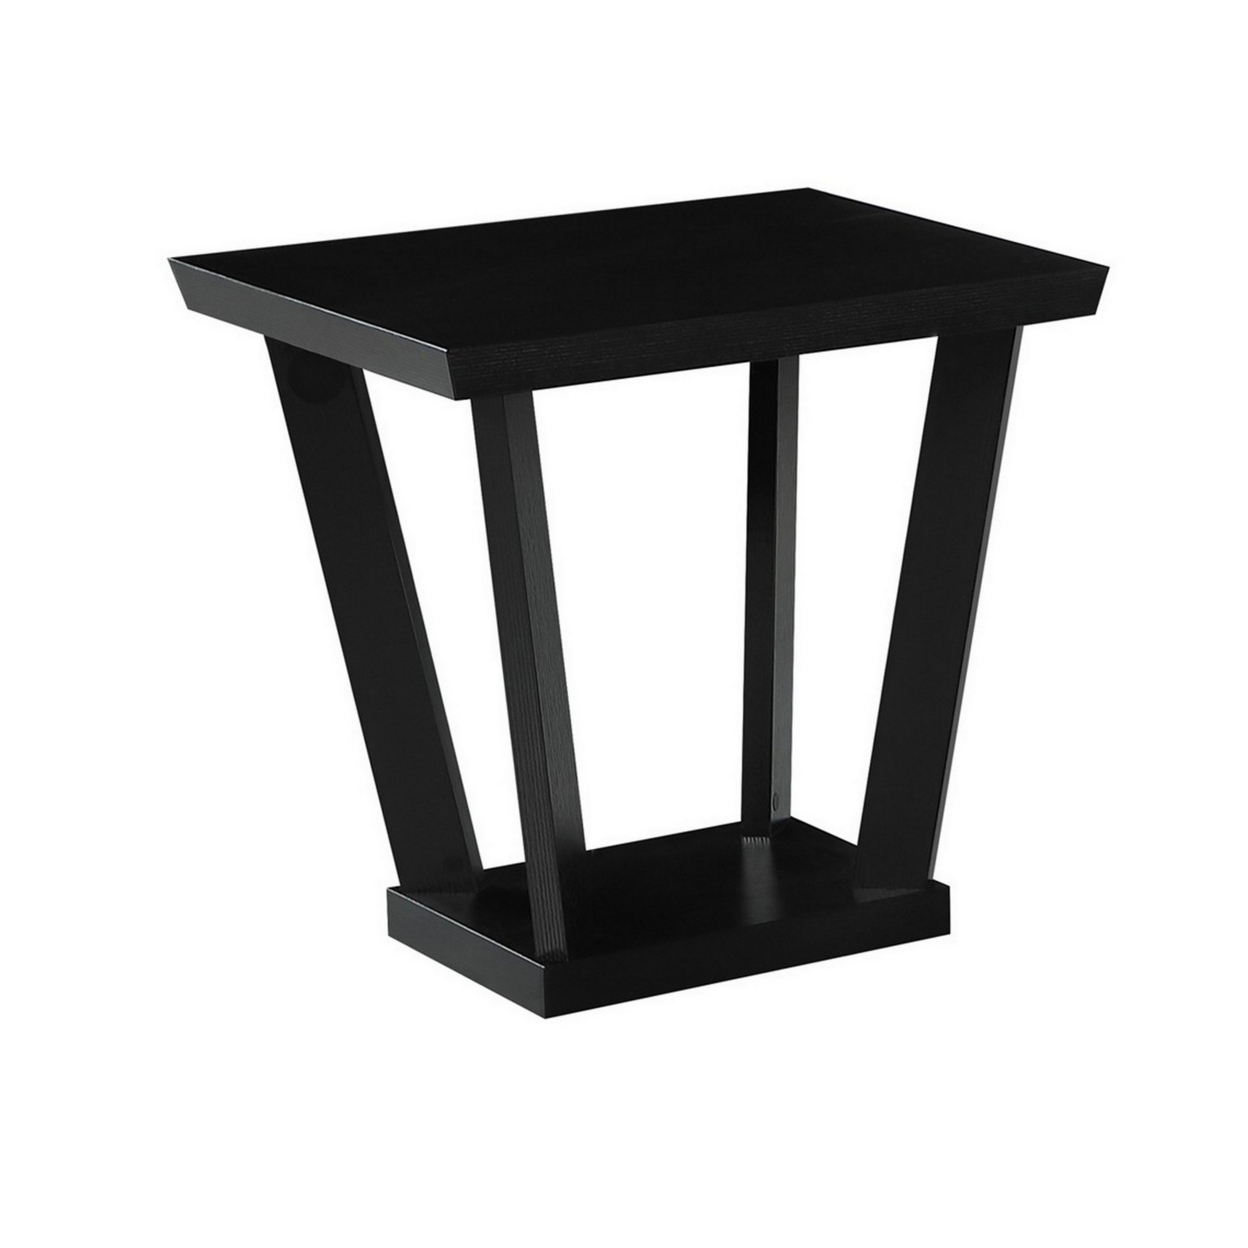 3 Piece Coffee Table Set, Angled Tapered Design, Black Rectangular Top- Saltoro Sherpi